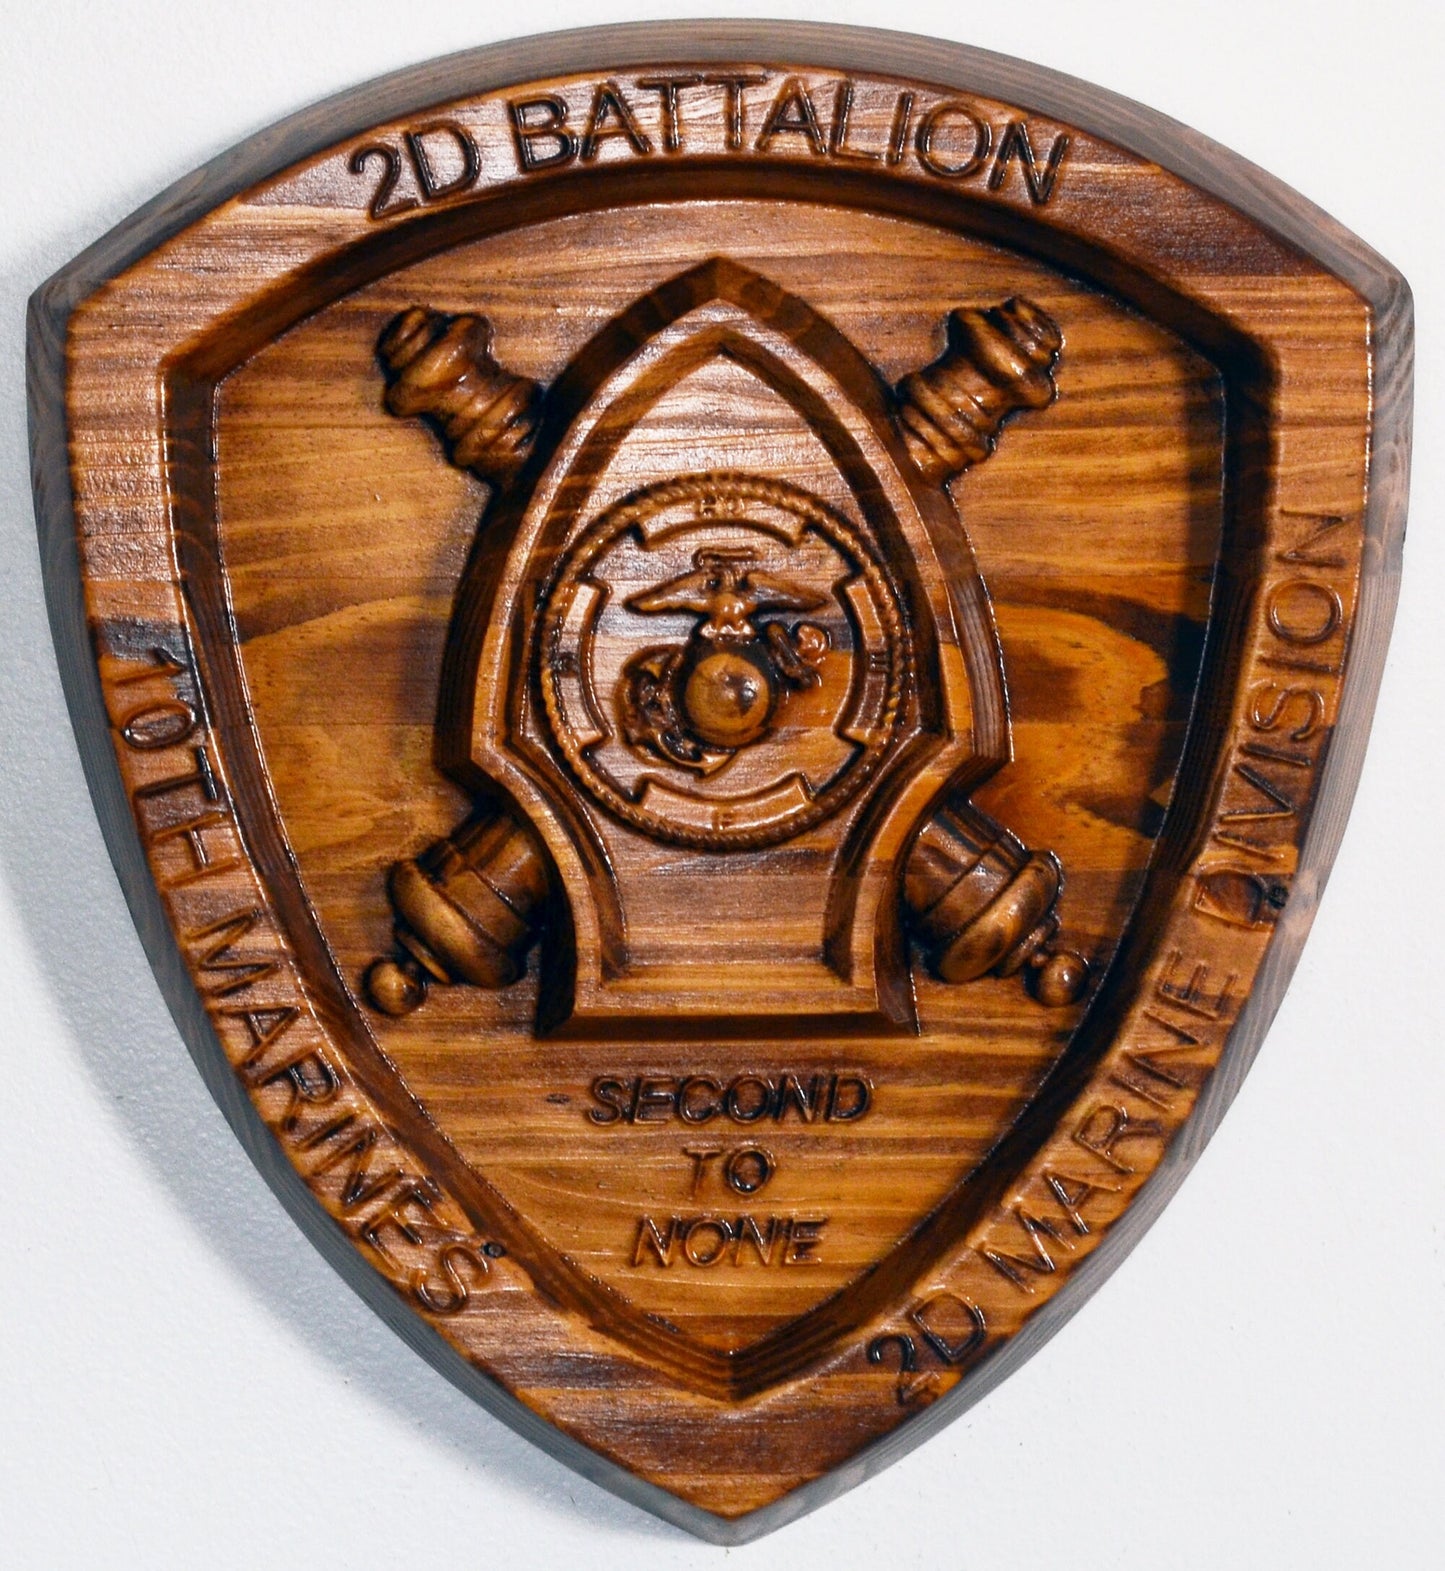 USMC 2nd Battalion 10th Marines, US Marine Corps wood plaque, military plaque